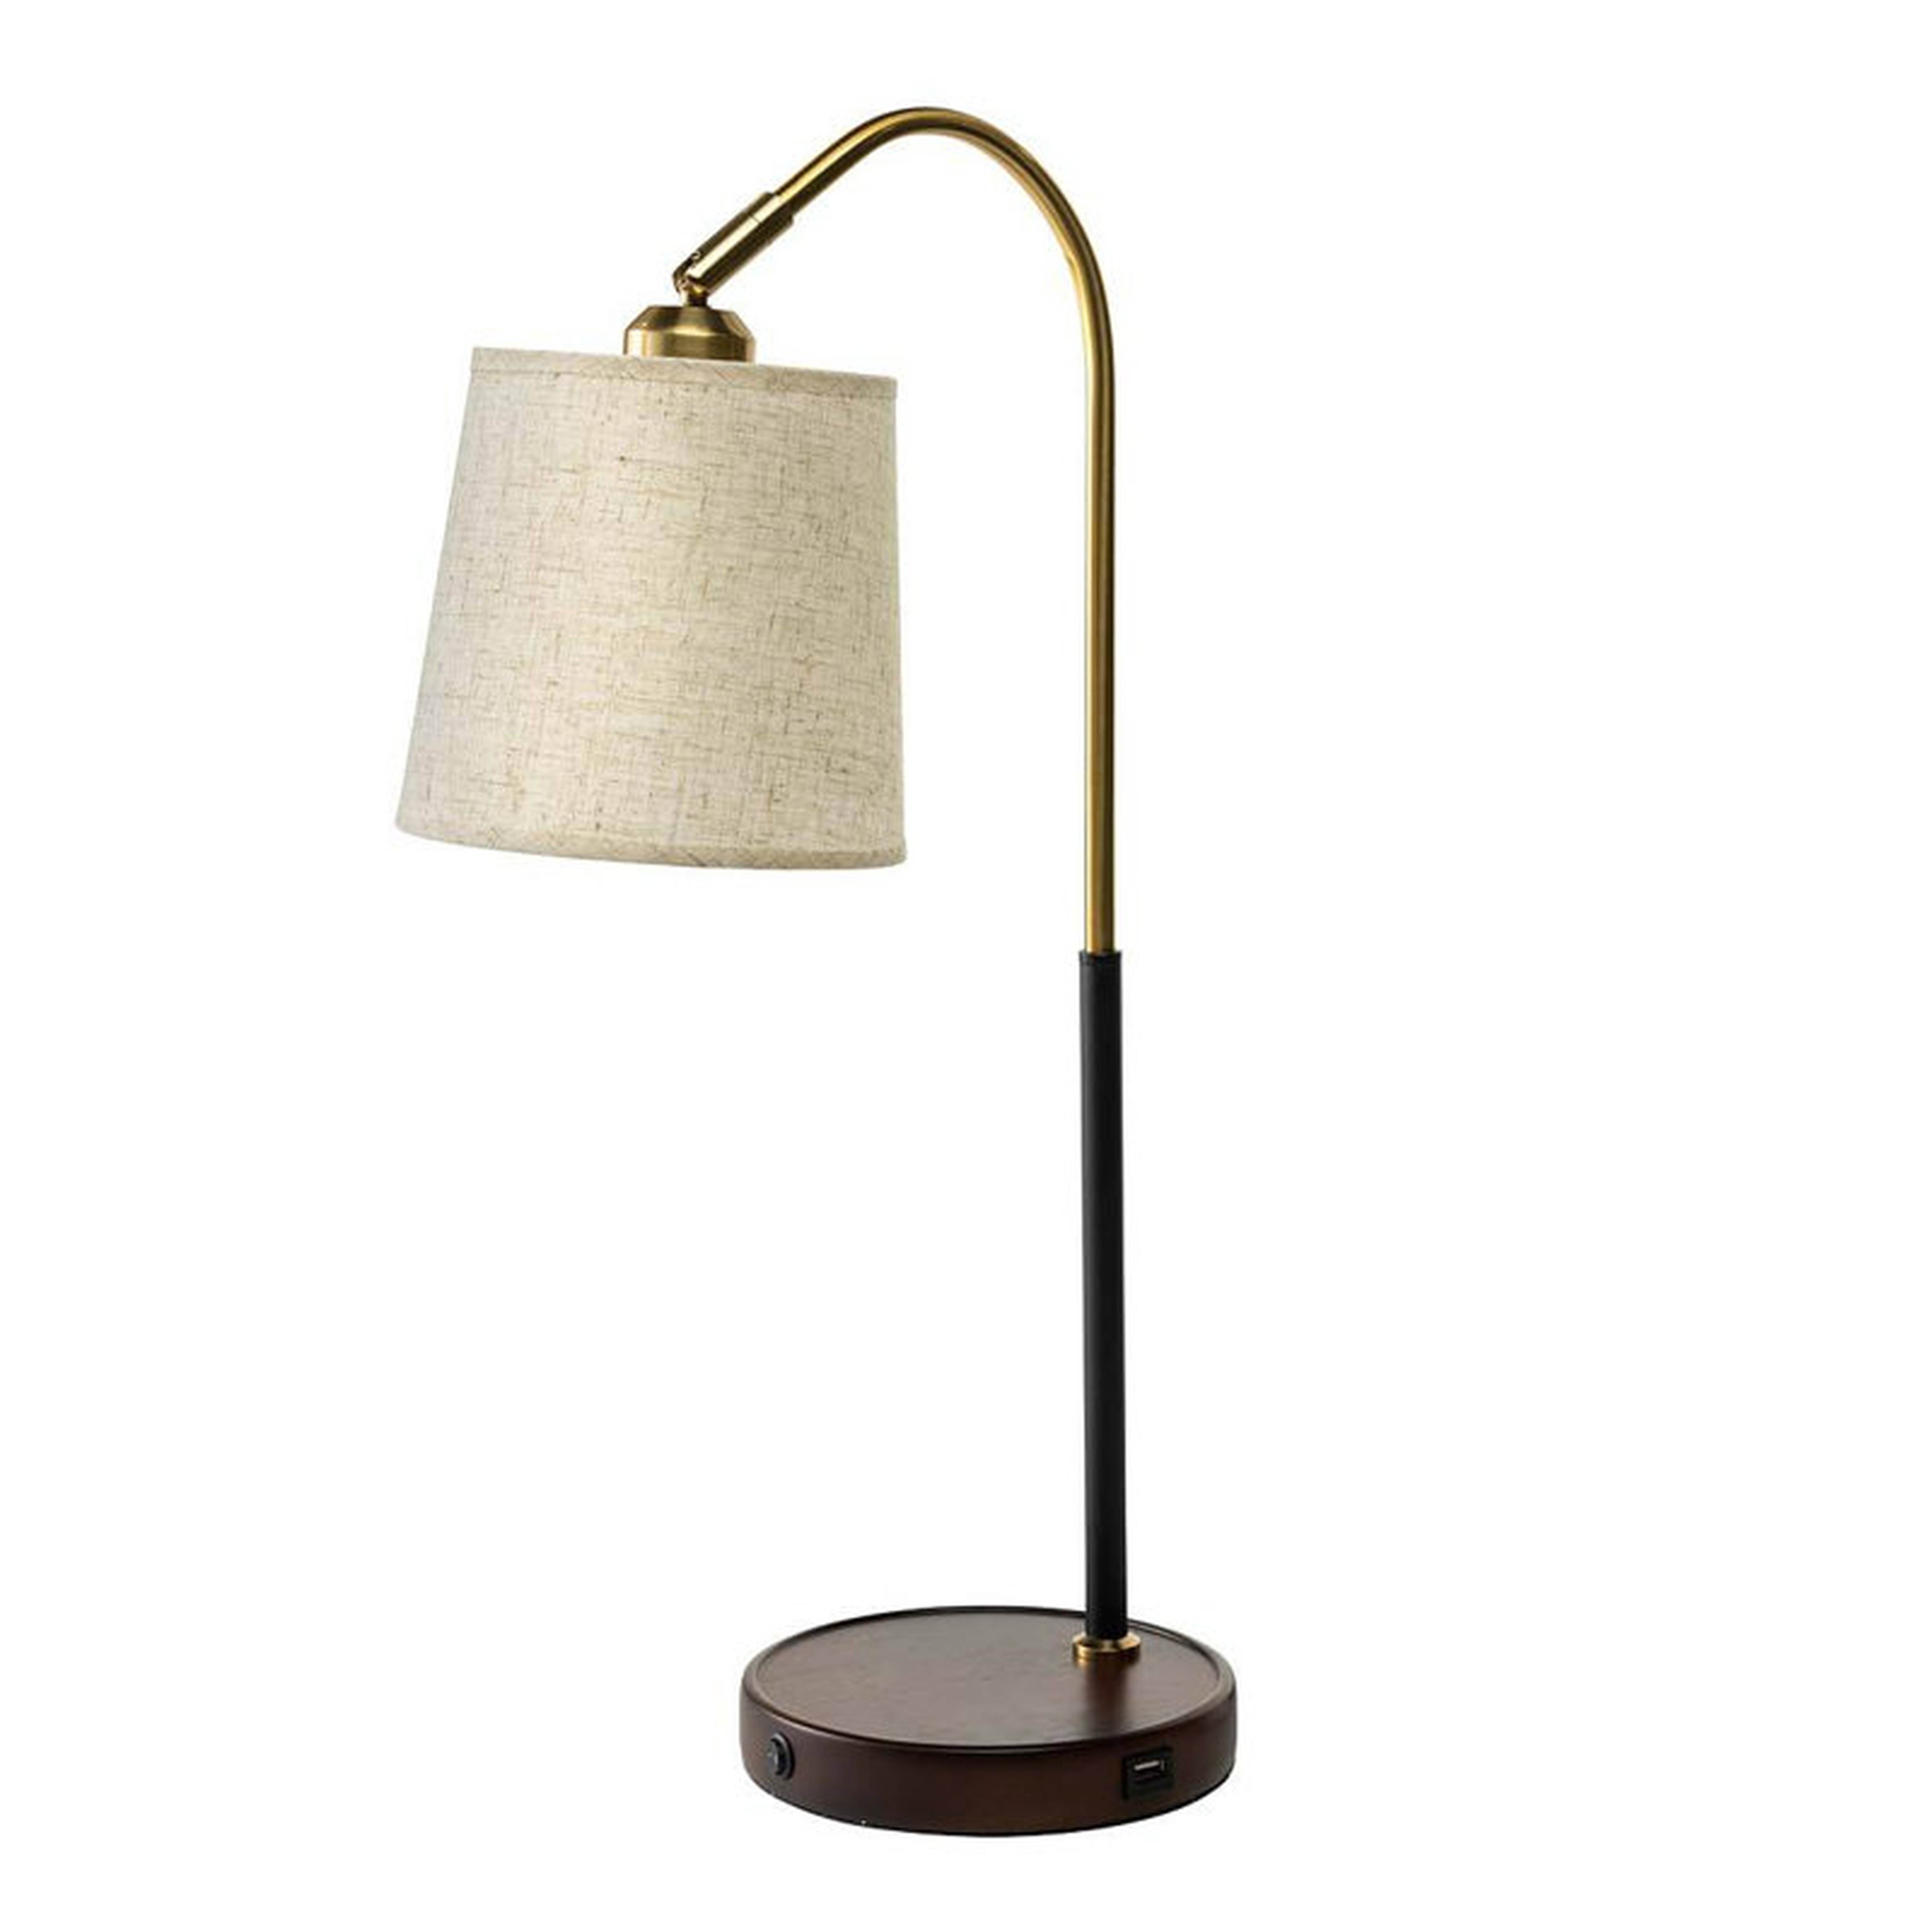 Desk Lamp With USB Port And Fabric Shade - Wayfair